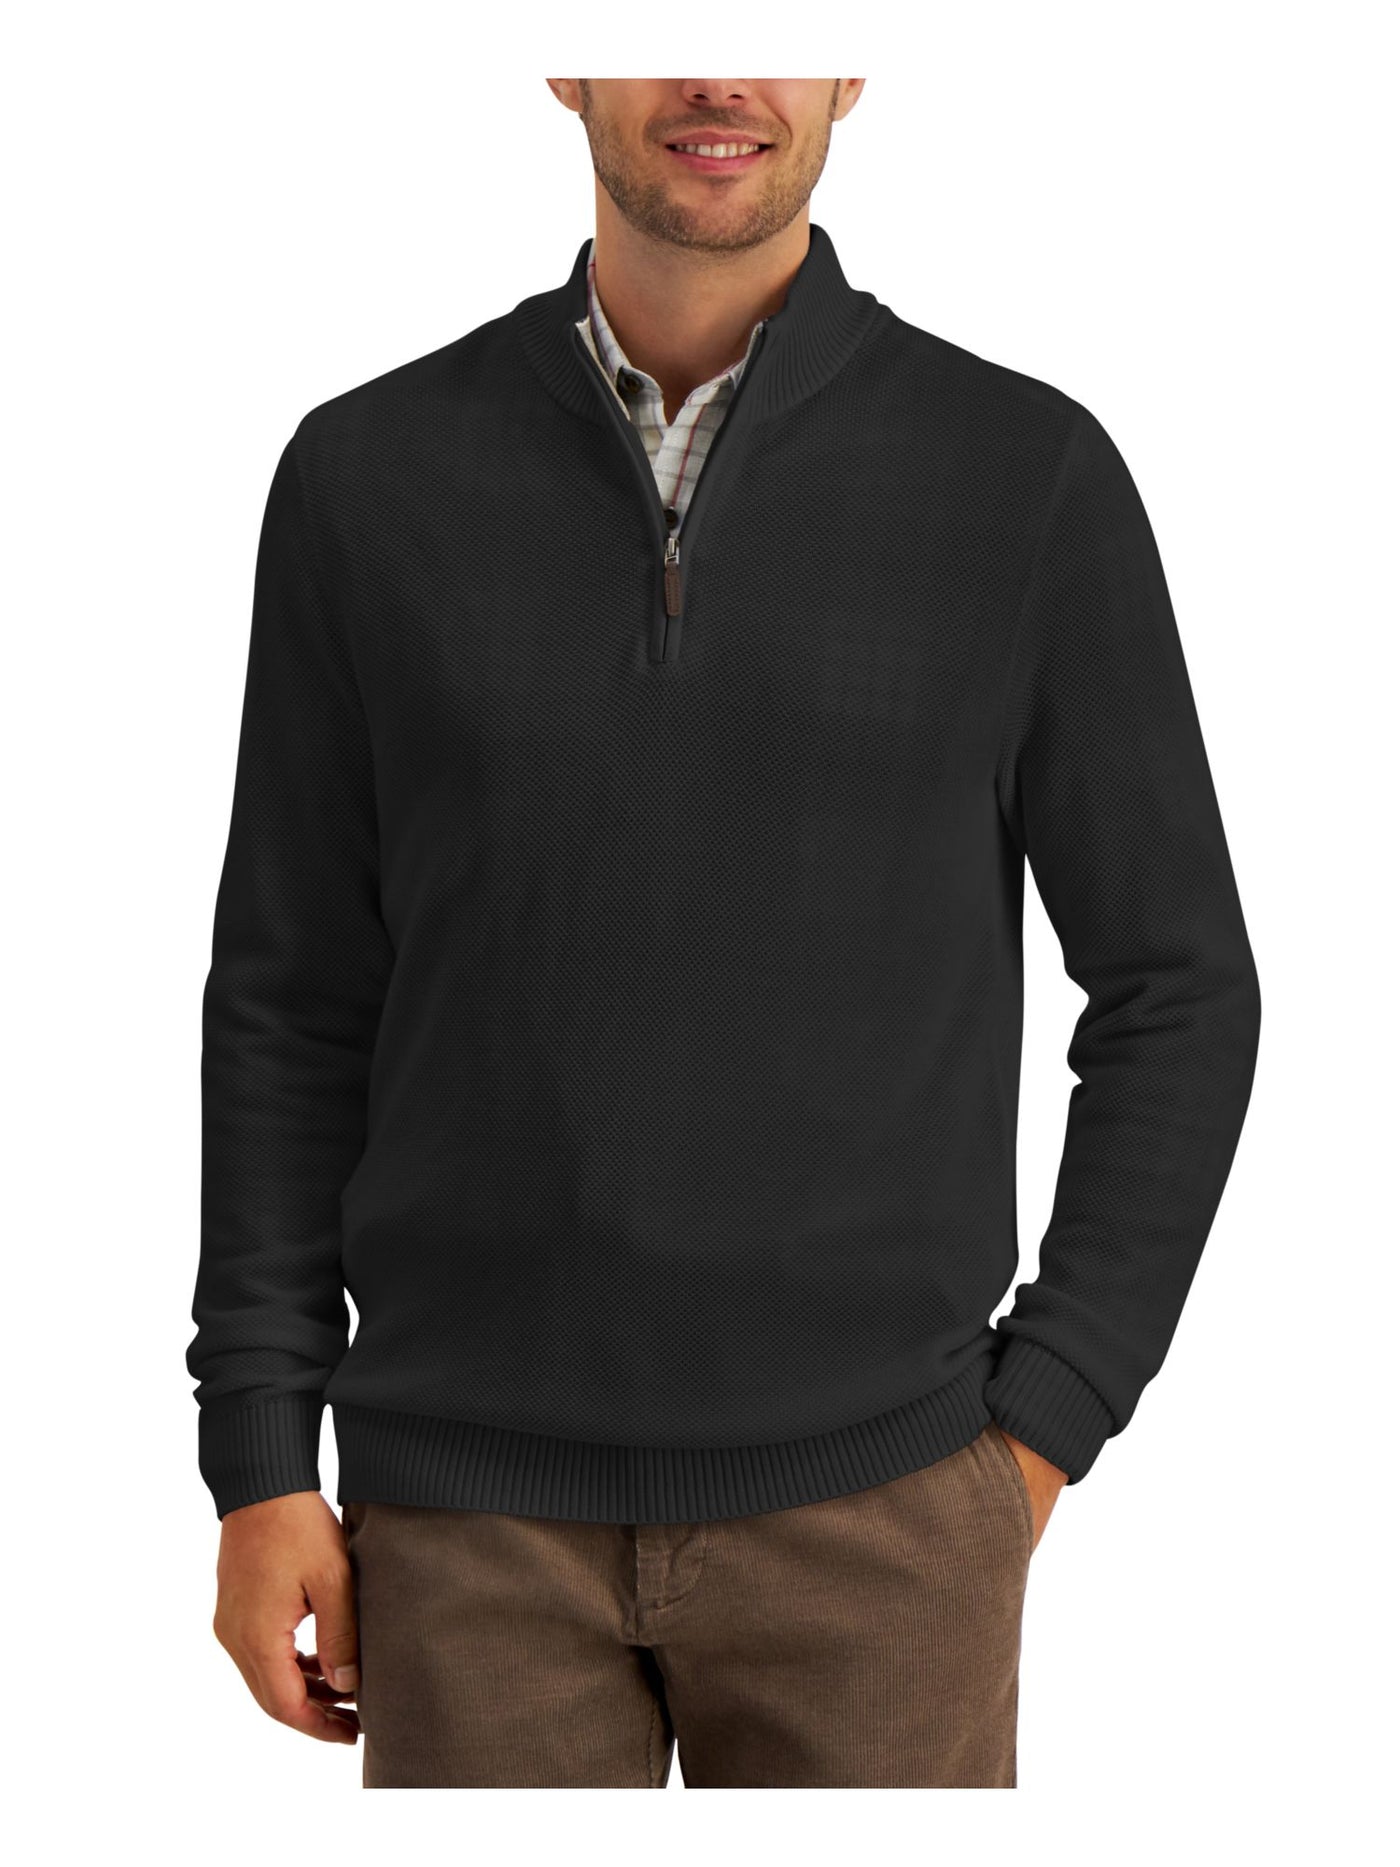 CLUBROOM Mens Black Quarter-Zip Pullover Sweater S